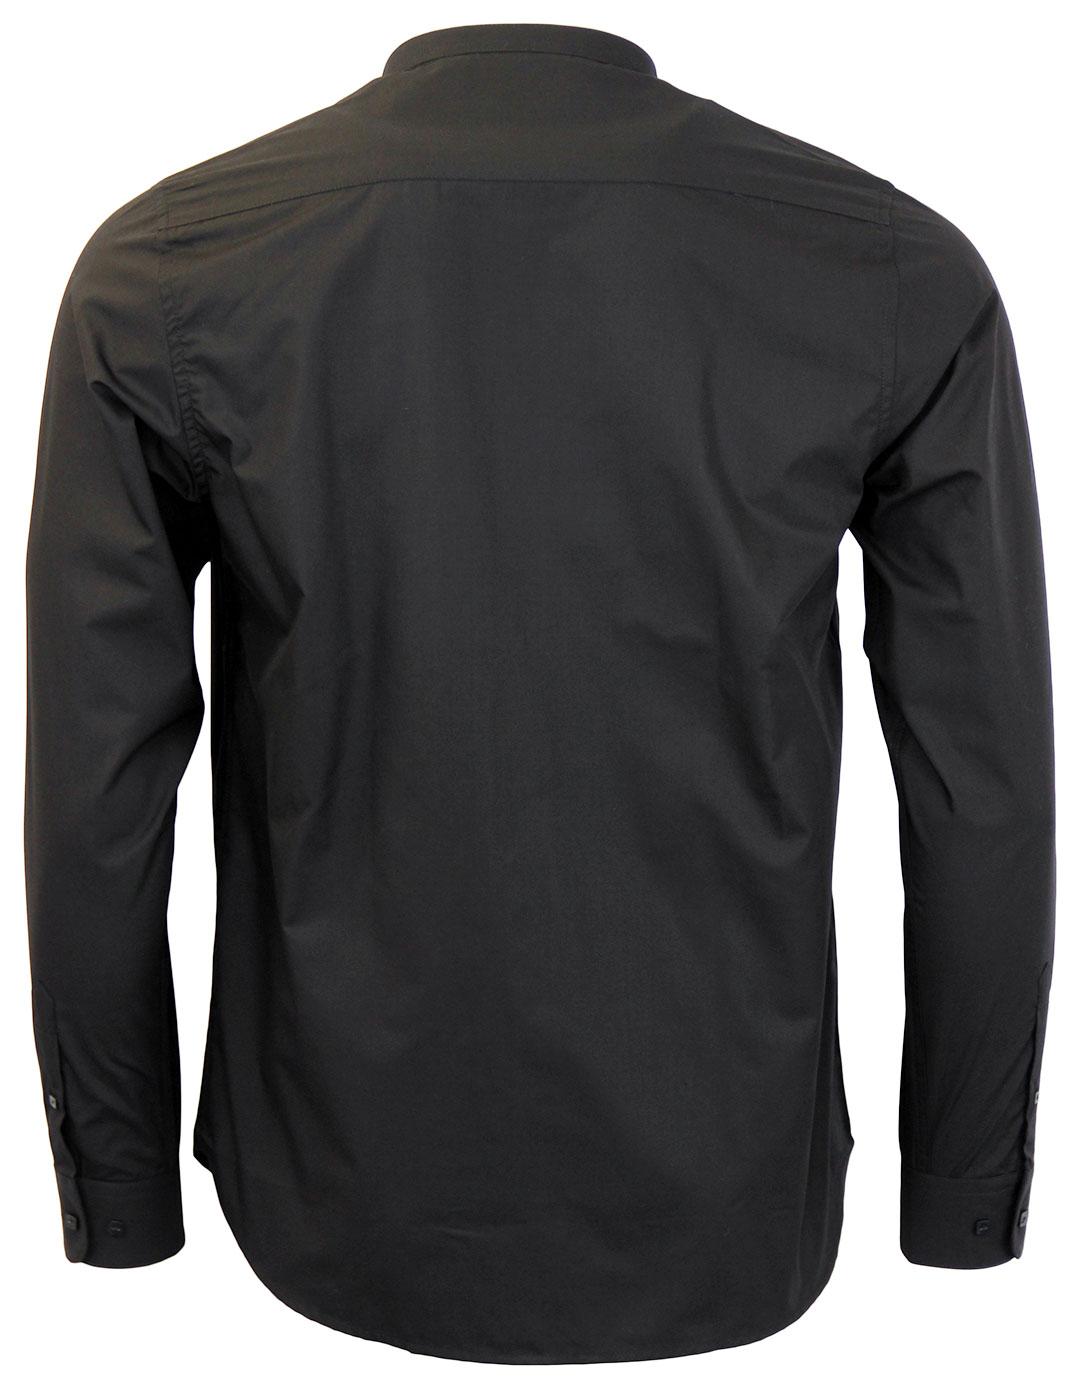 GABICCI VINTAGE Retro Sixties Mod Grandad Collar Shirt in Black